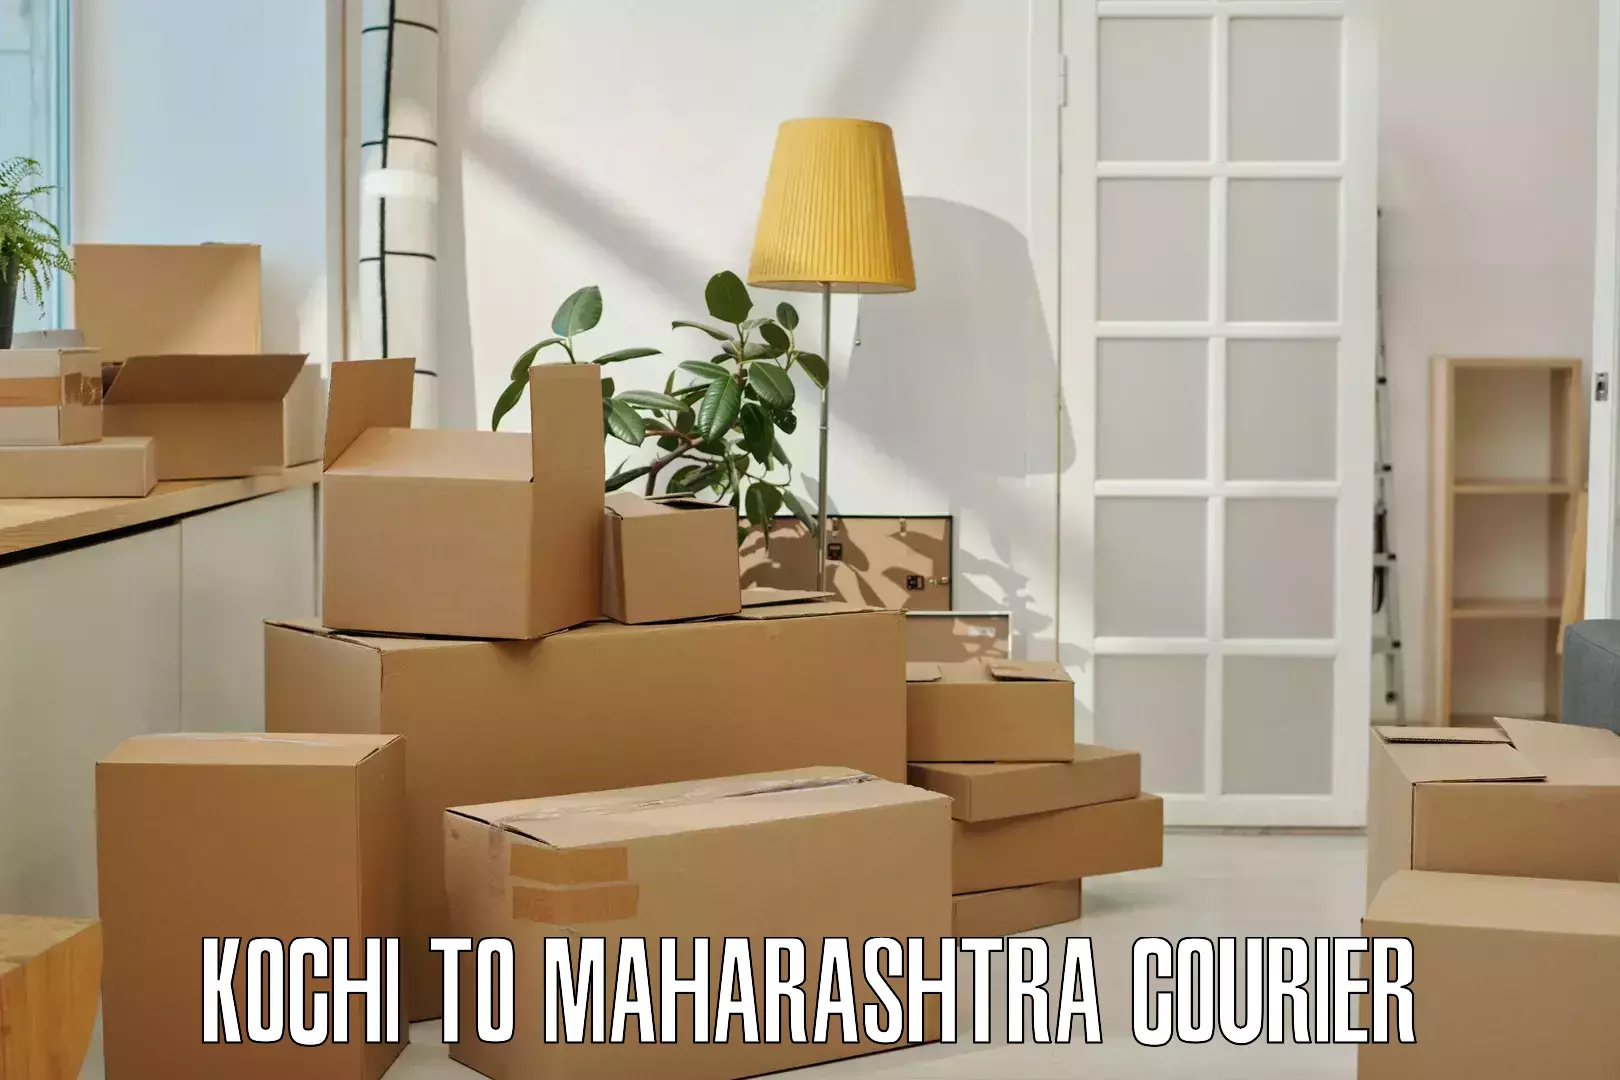 Premium delivery services in Kochi to Maharashtra